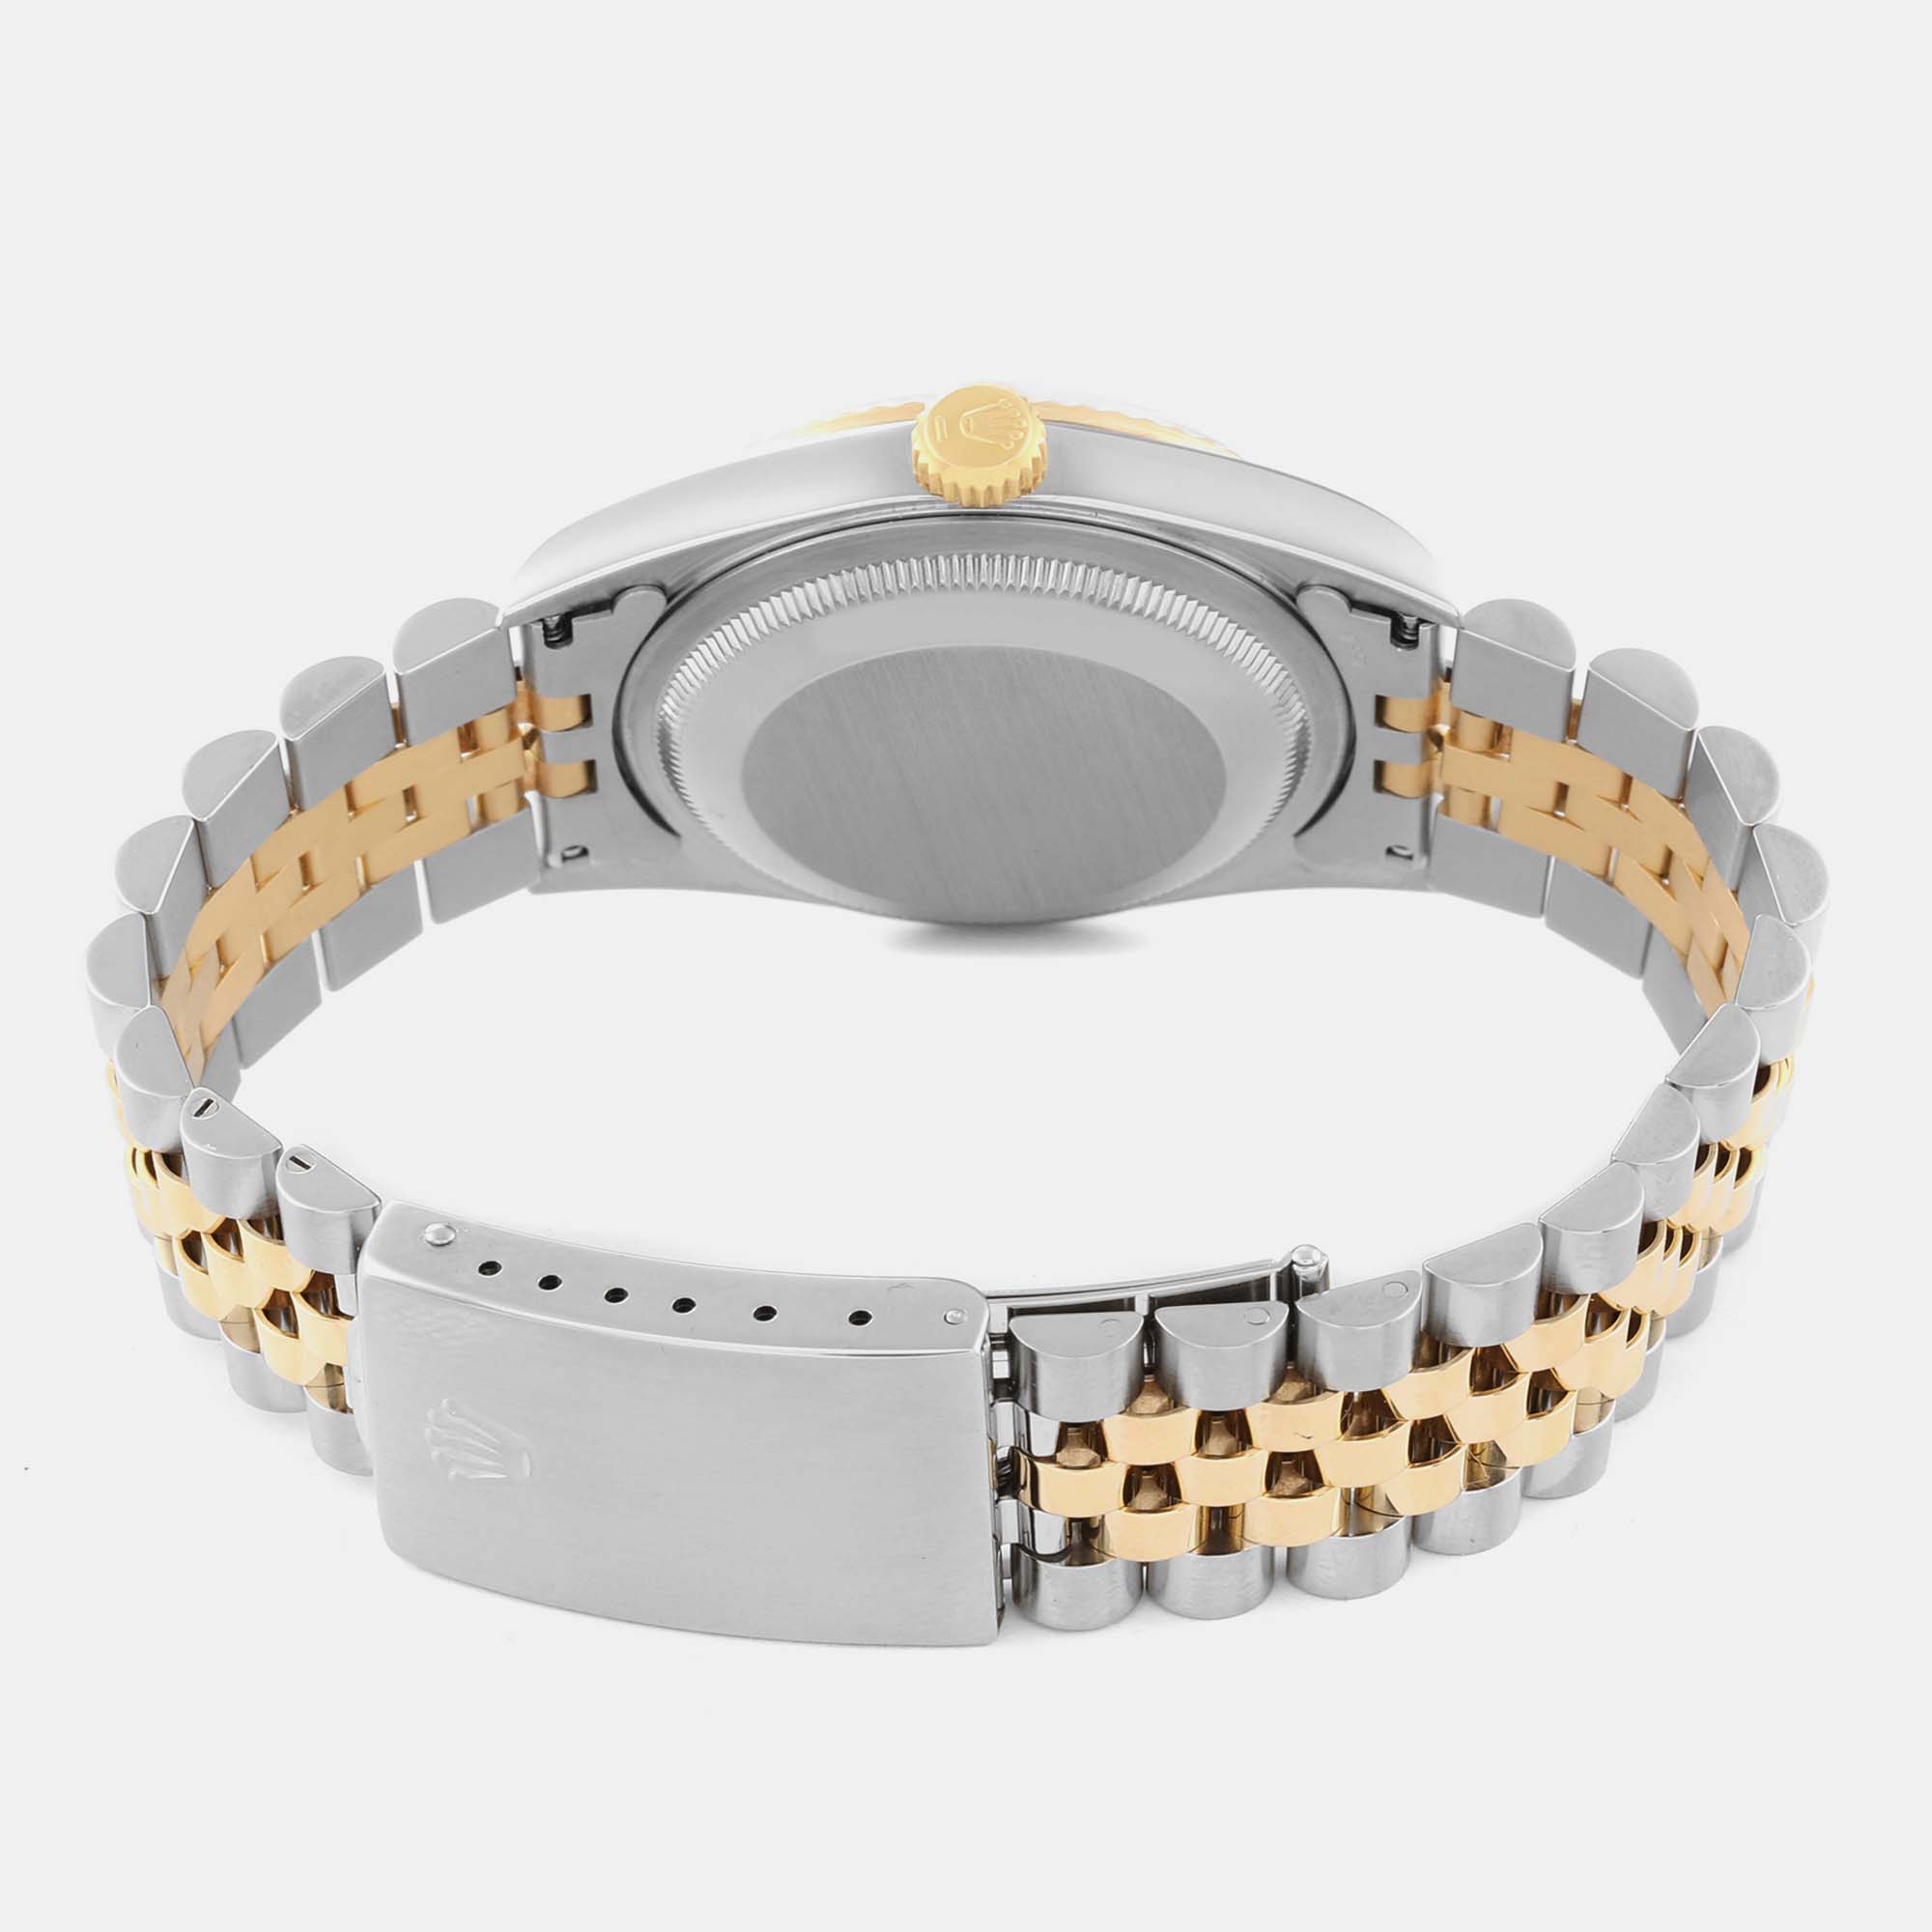 Rolex Datejust Steel Yellow Gold Diamond Anniversary Dial Mens Watch 16233